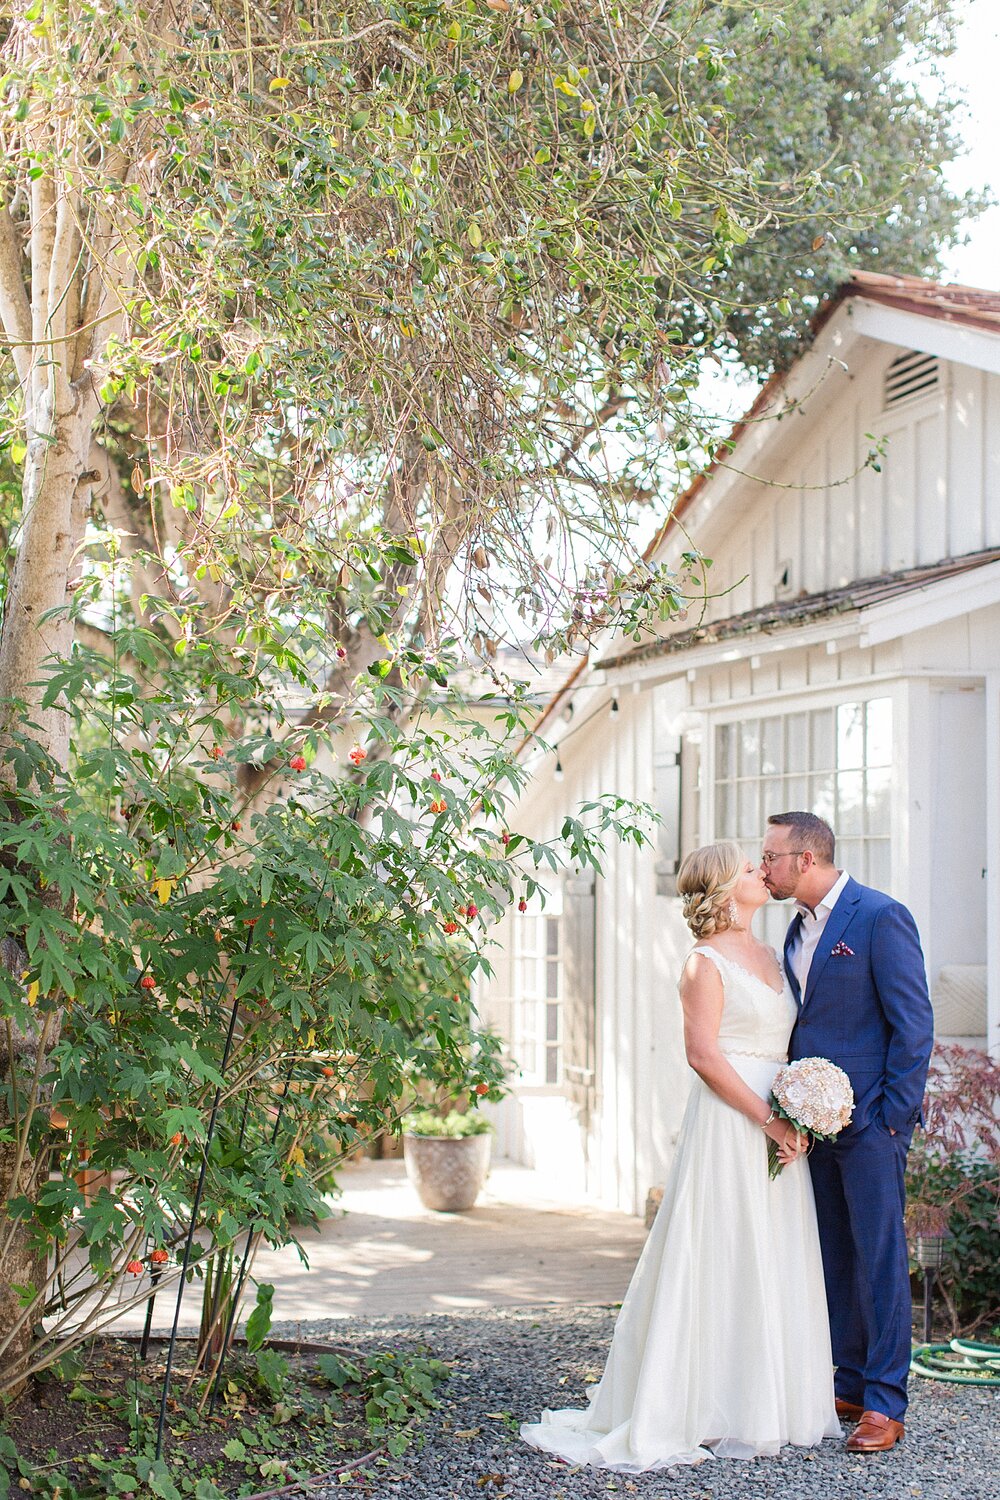 Carmel Wedding Photography | Pacific Grove Photographer | thevondys.com